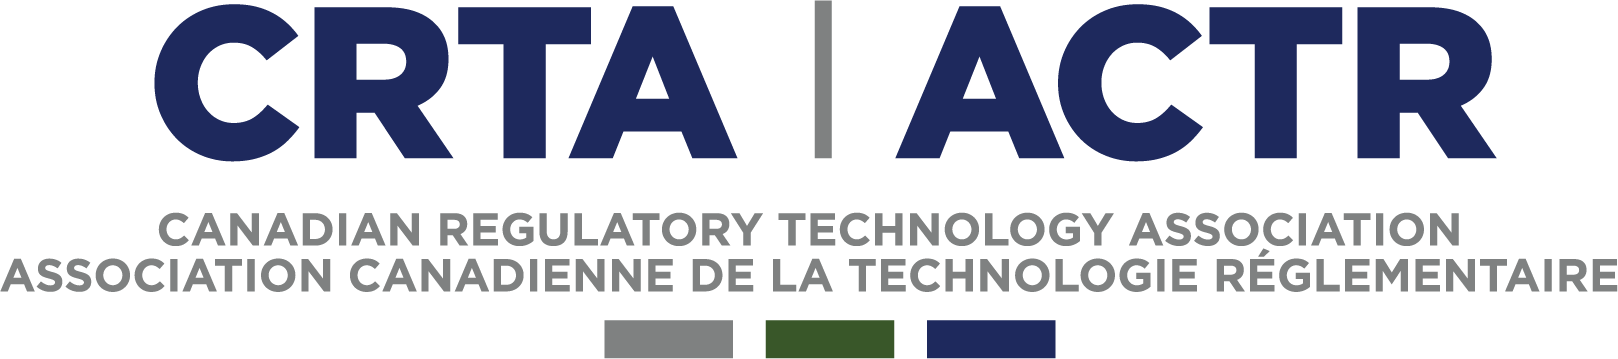 Canadian Regulatory Technology Association logo